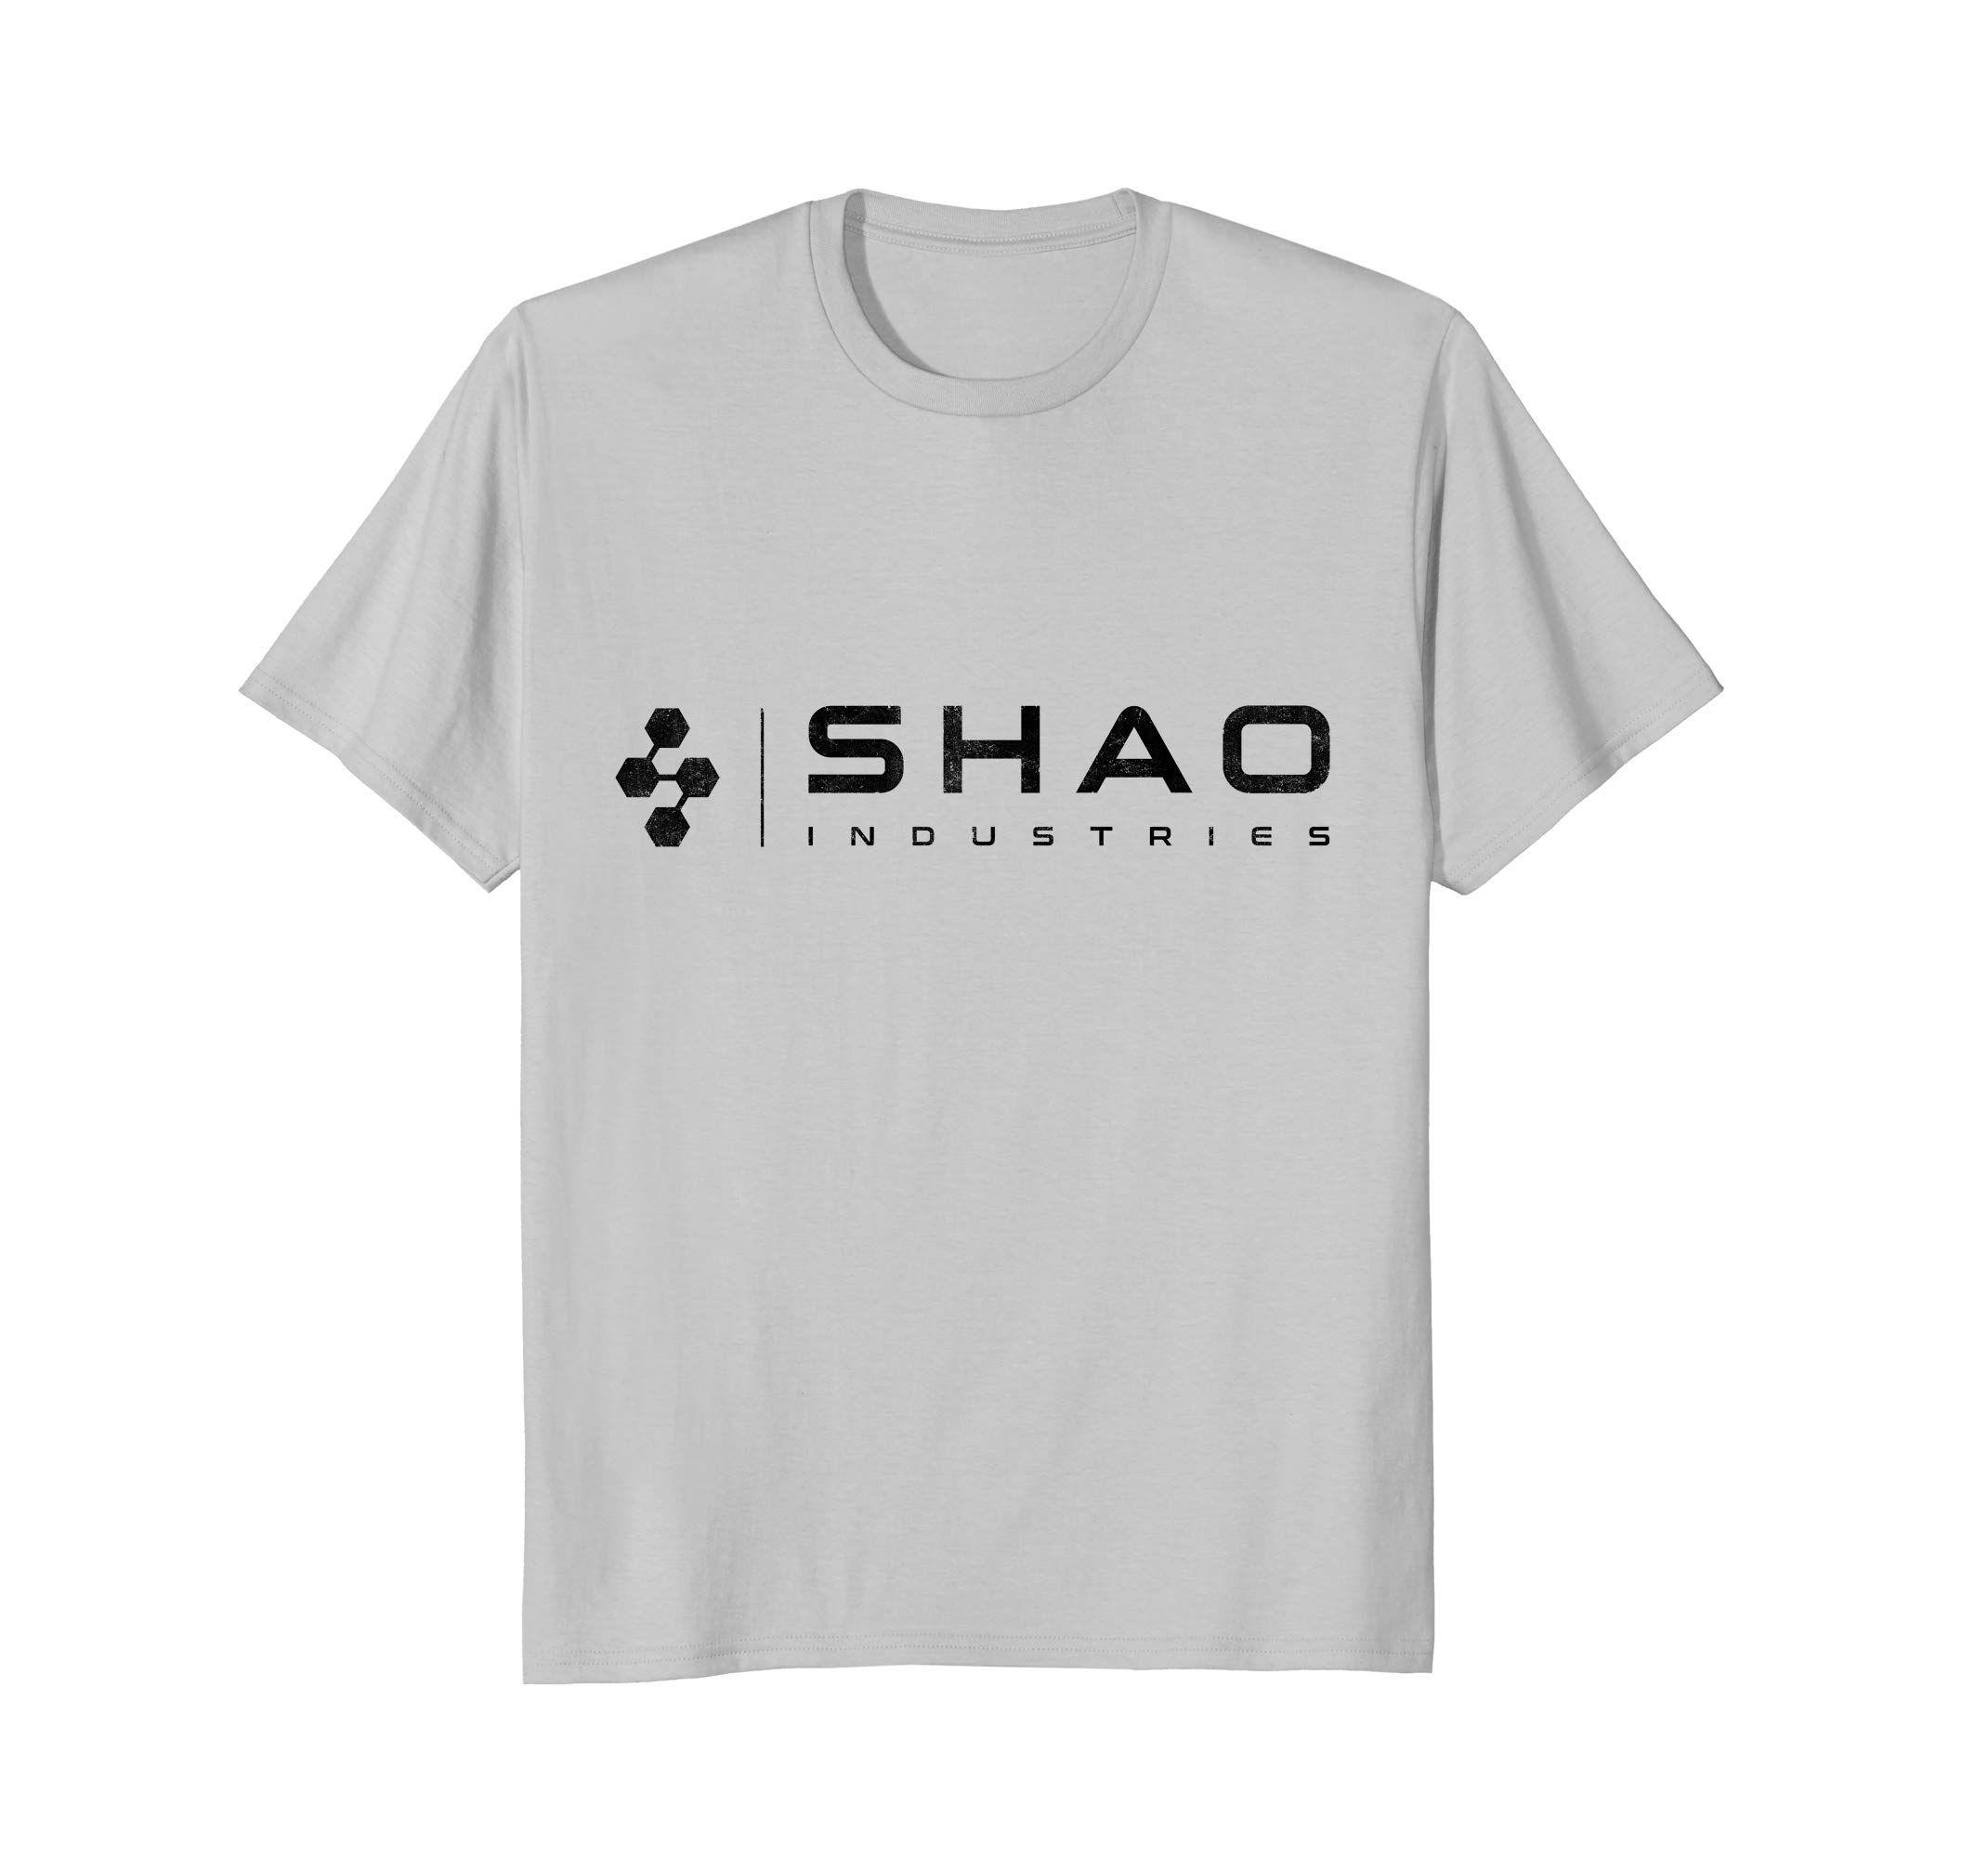 Shao Logo - Amazon.com: Shao Industries Logo T-Shirt: Clothing